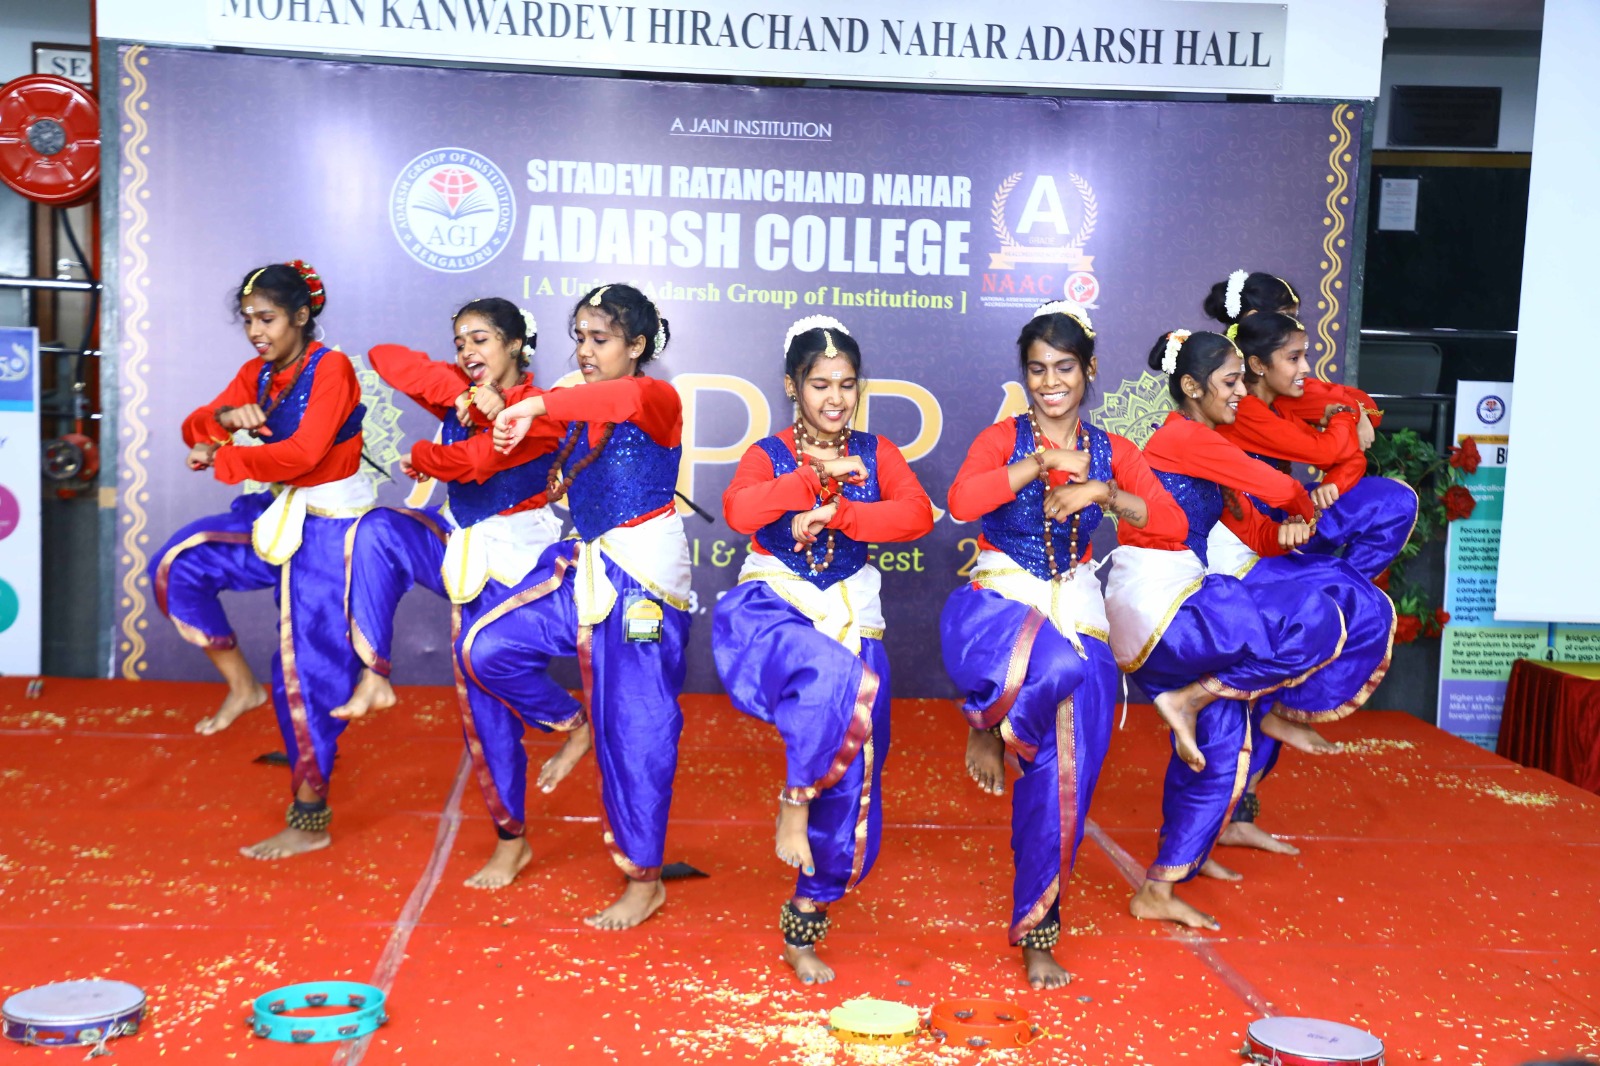 Adarsh college (20)